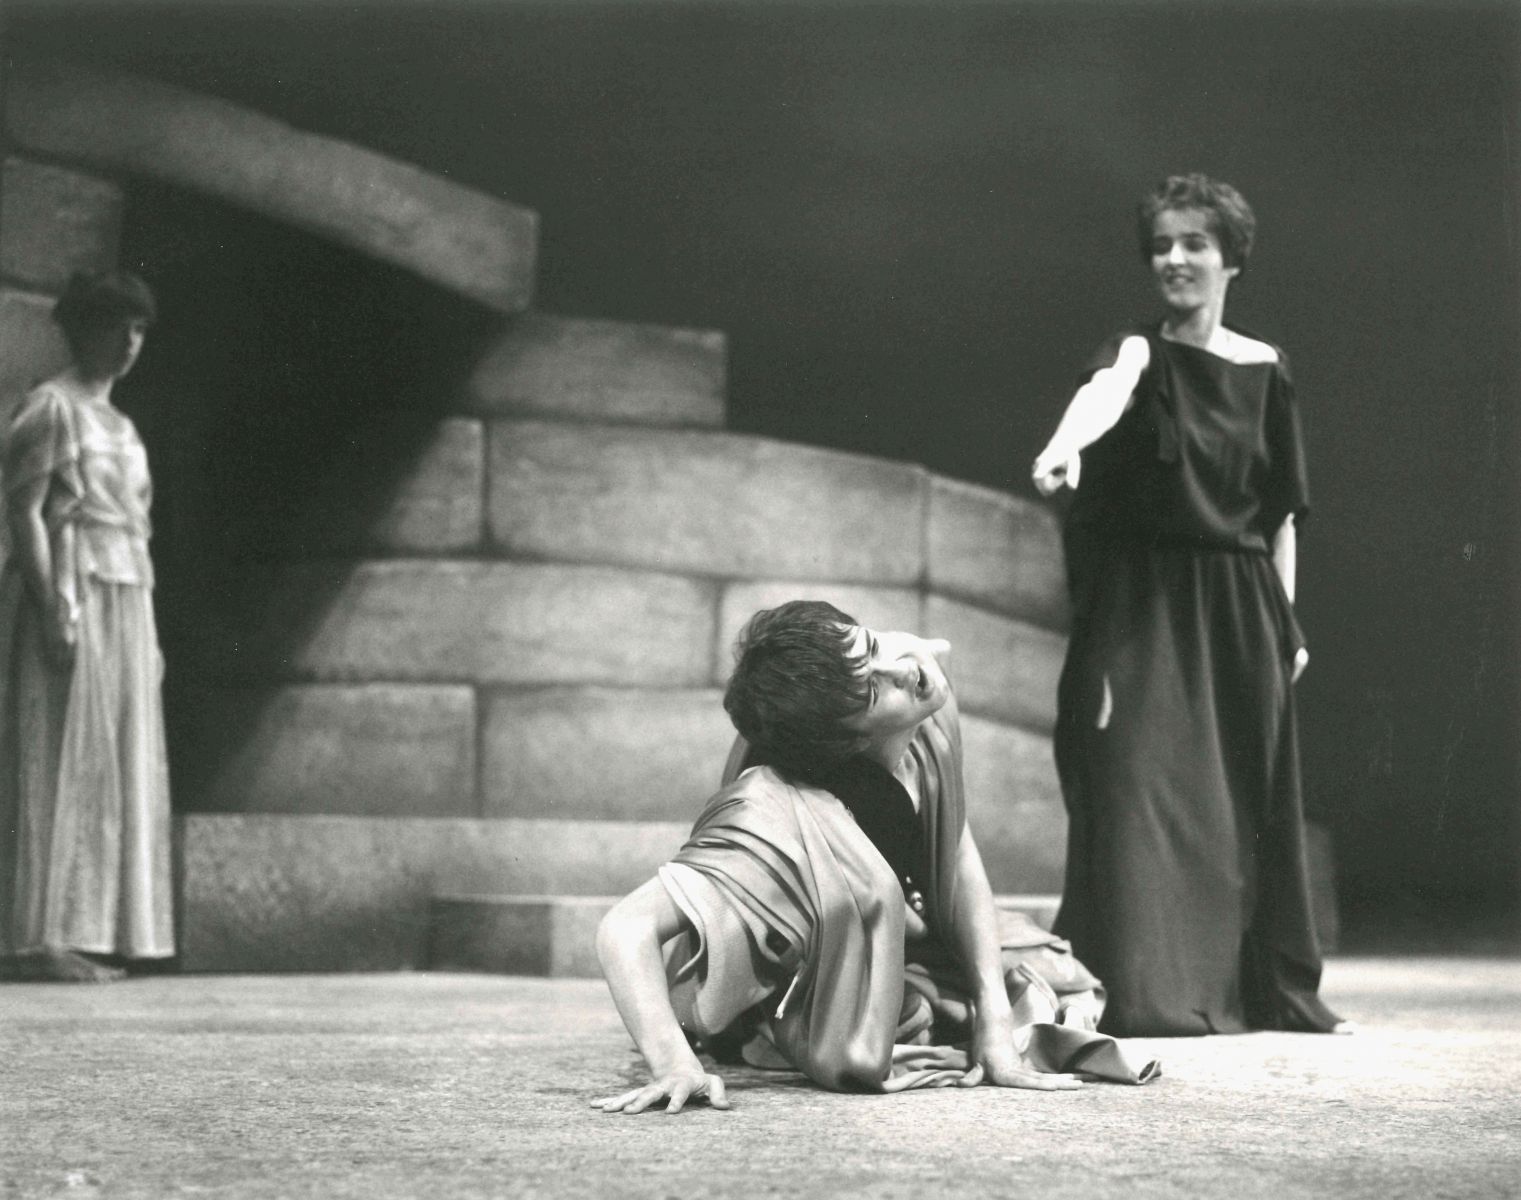 Euripides Electra, Arts Theatre, Cambridge, 1980. Electra goads Orestes into matricide. Greek costumes with representational set for presentation in indoor theatre.